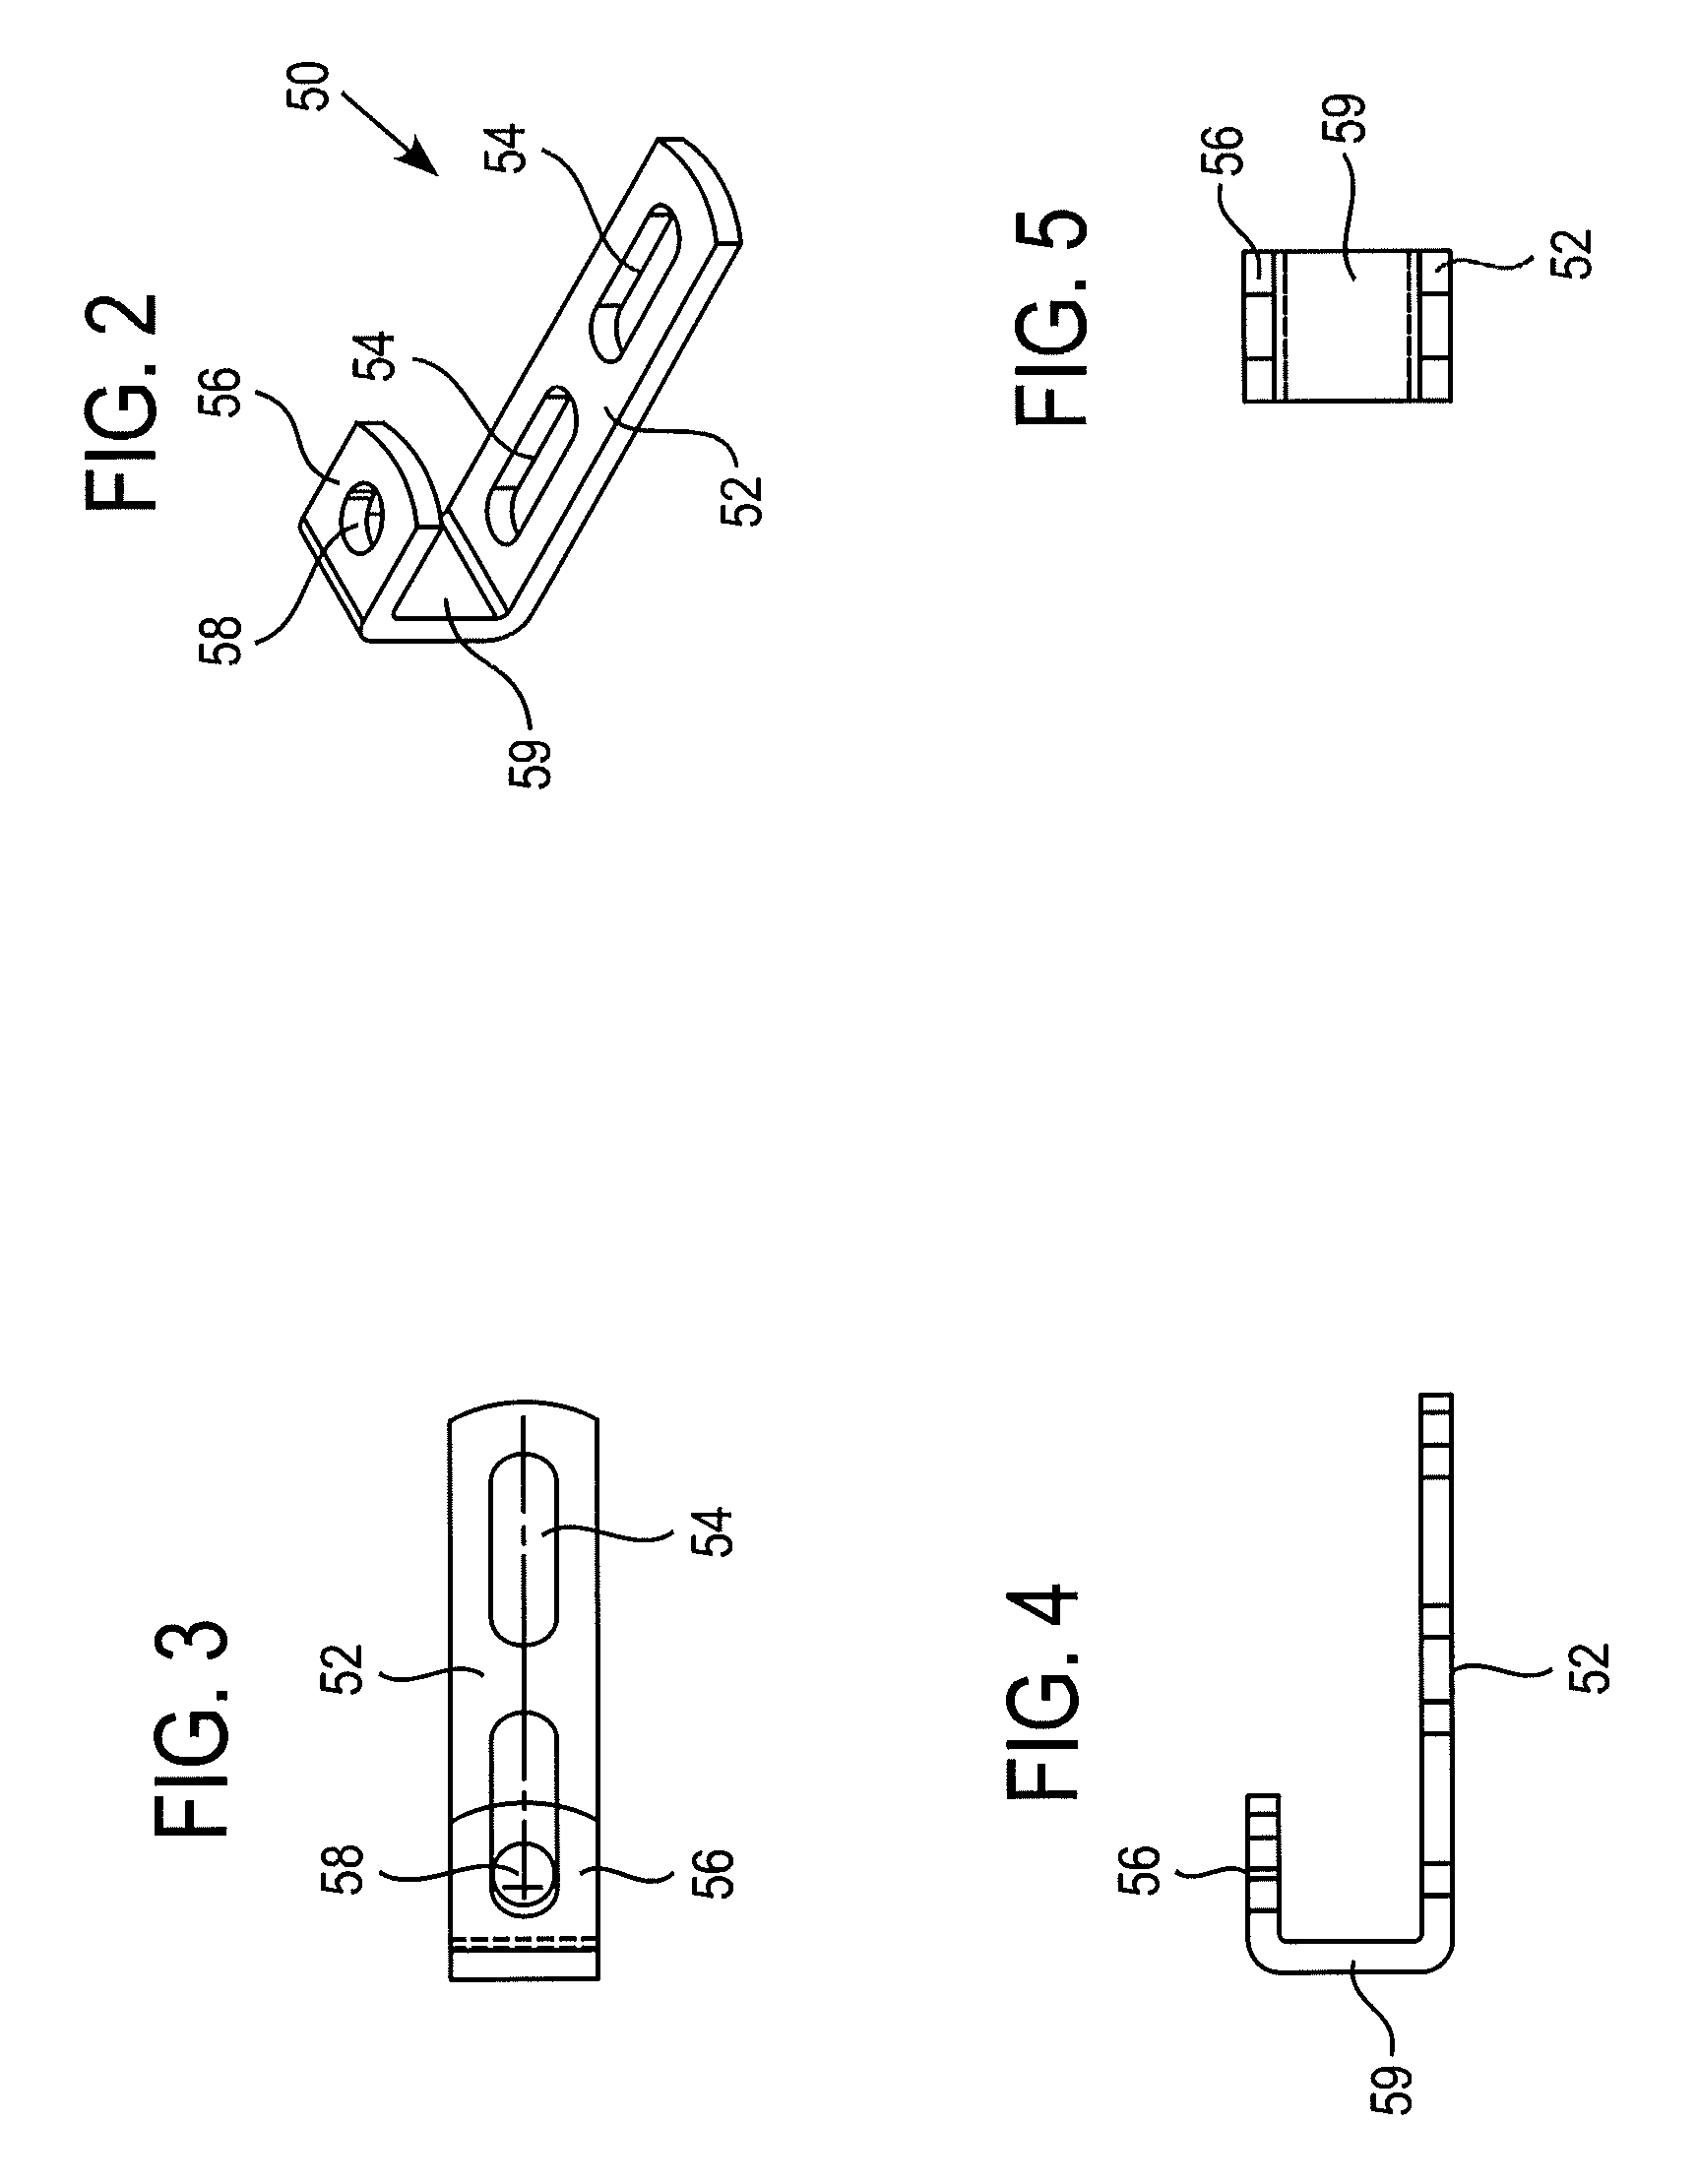 Conveyor belt with improved edge configuration